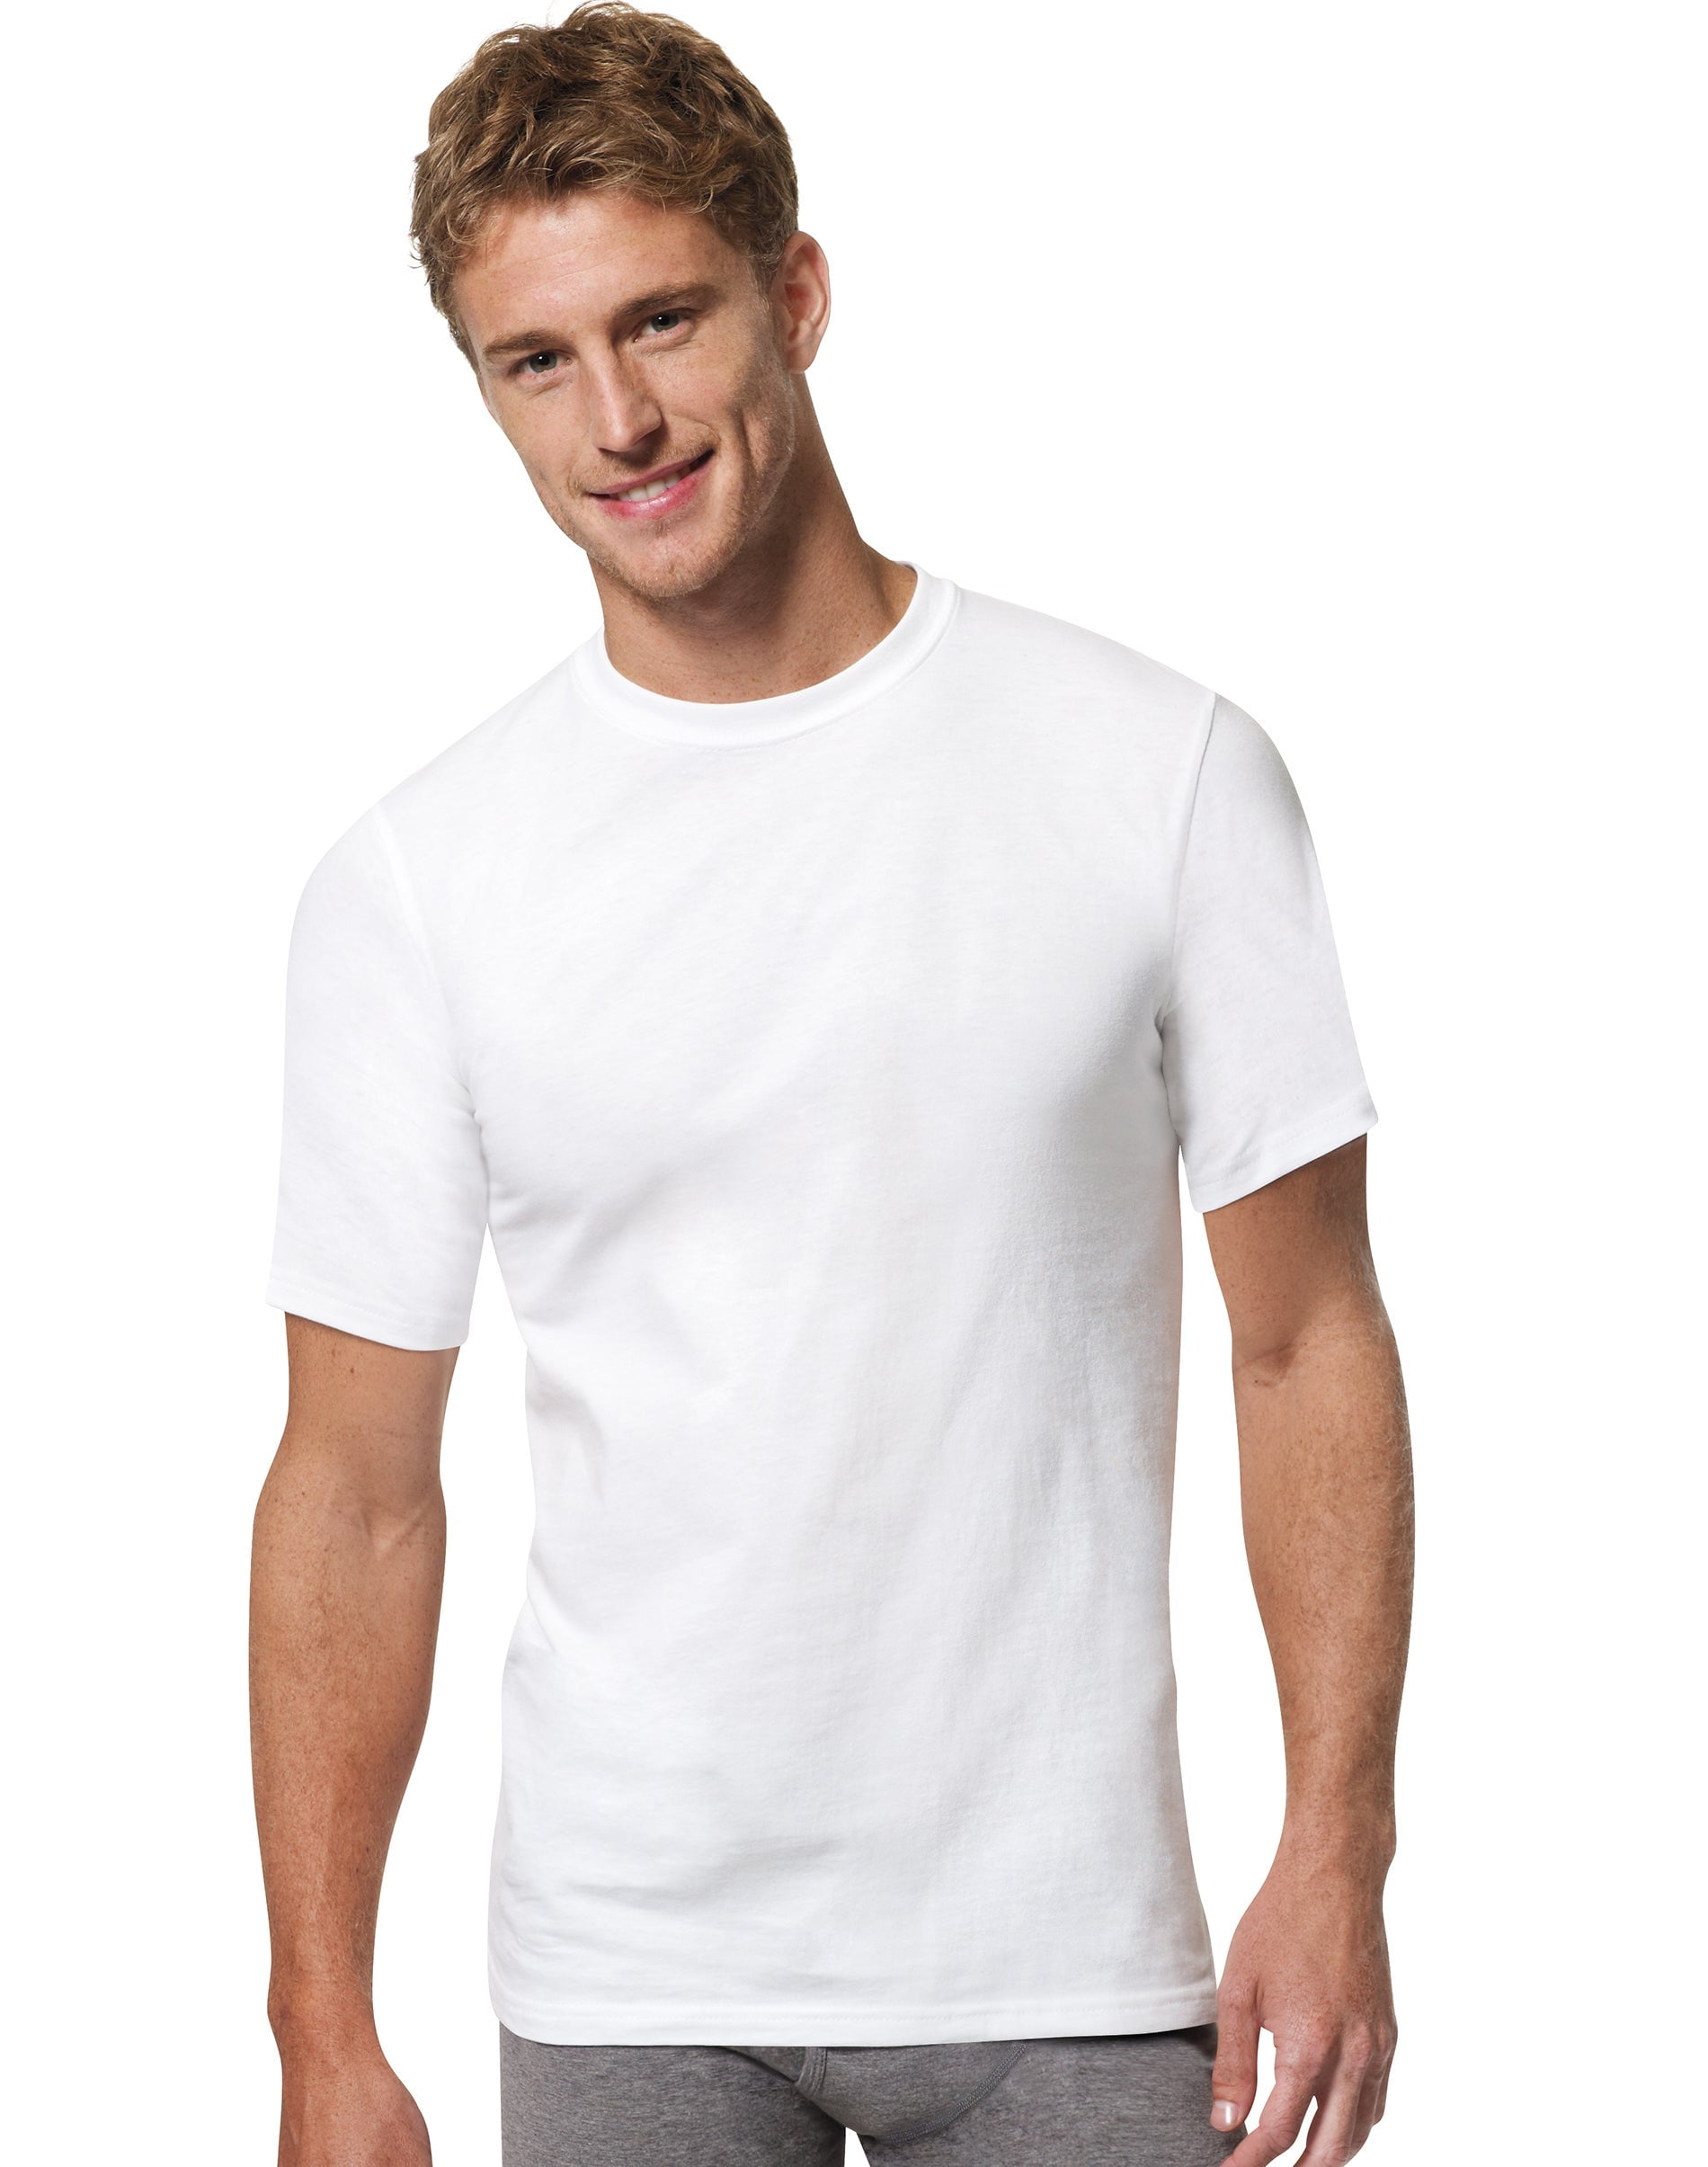 Hanes 016182047894 FreshIQ ComfortBlend Mens Crewneck T-Shirt, White - 2XT  - Pack of 4 